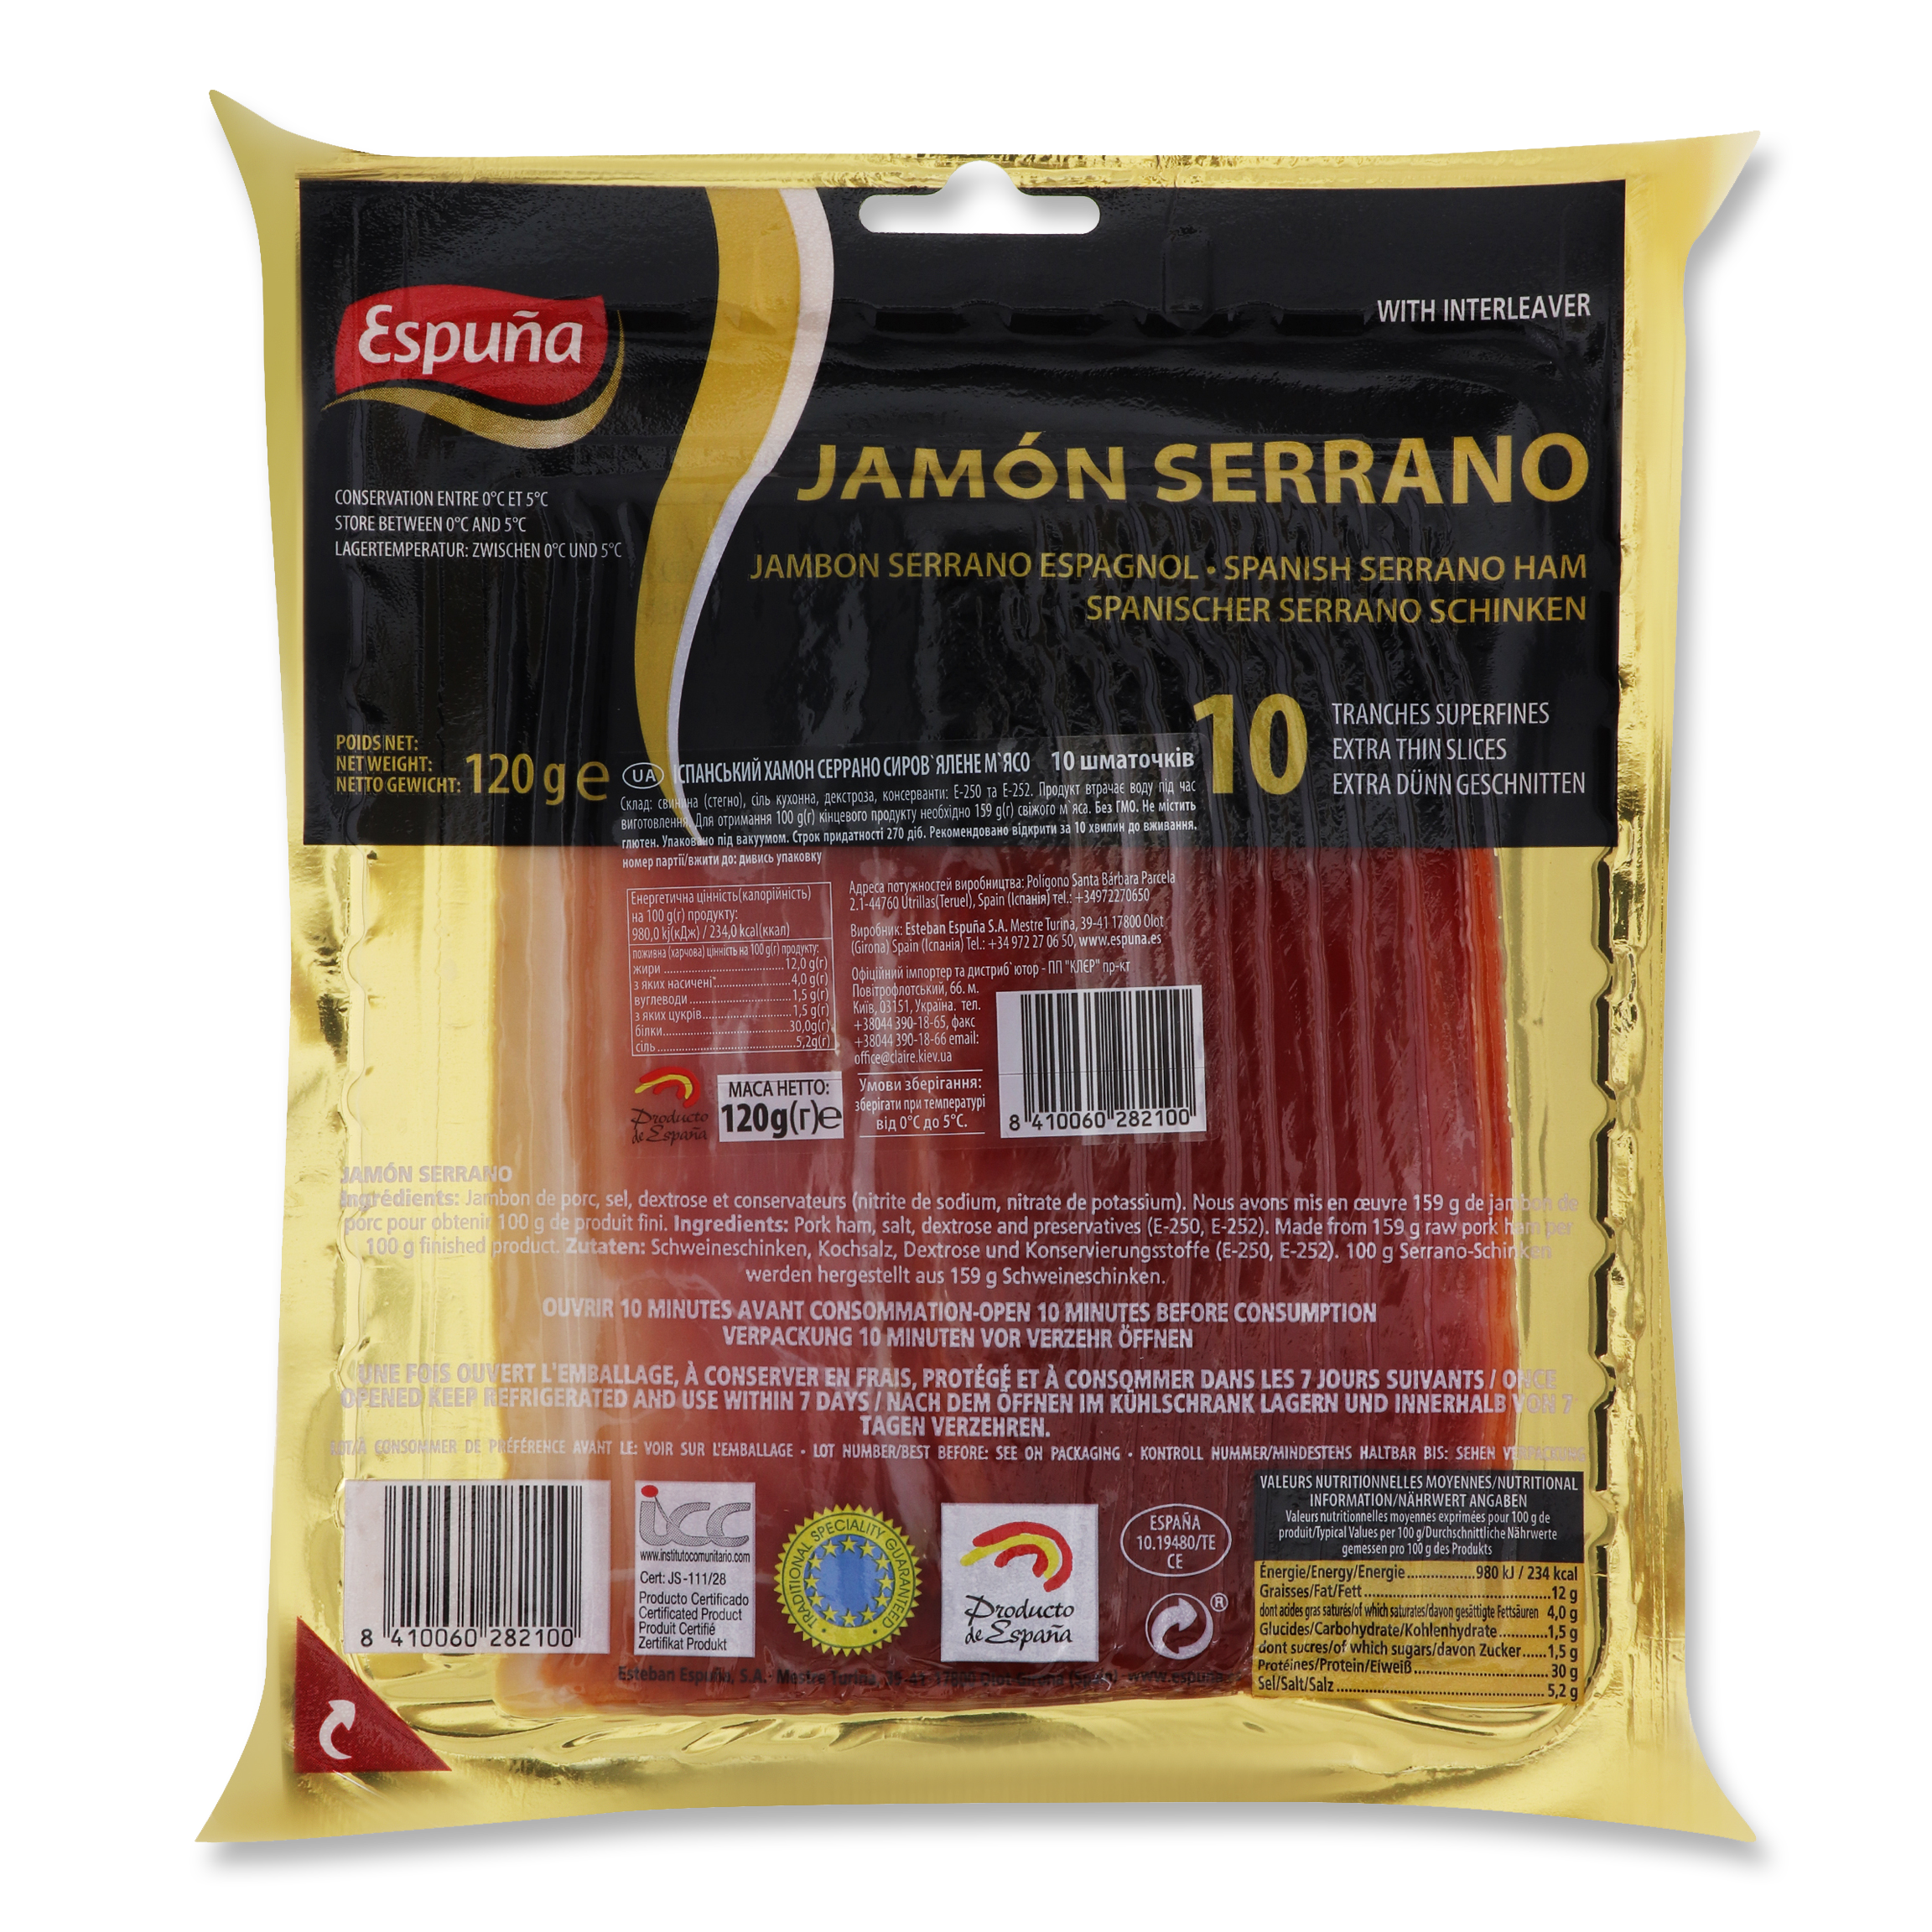 Espuna Raw-Cured Sliced Serrano Jamon 120g